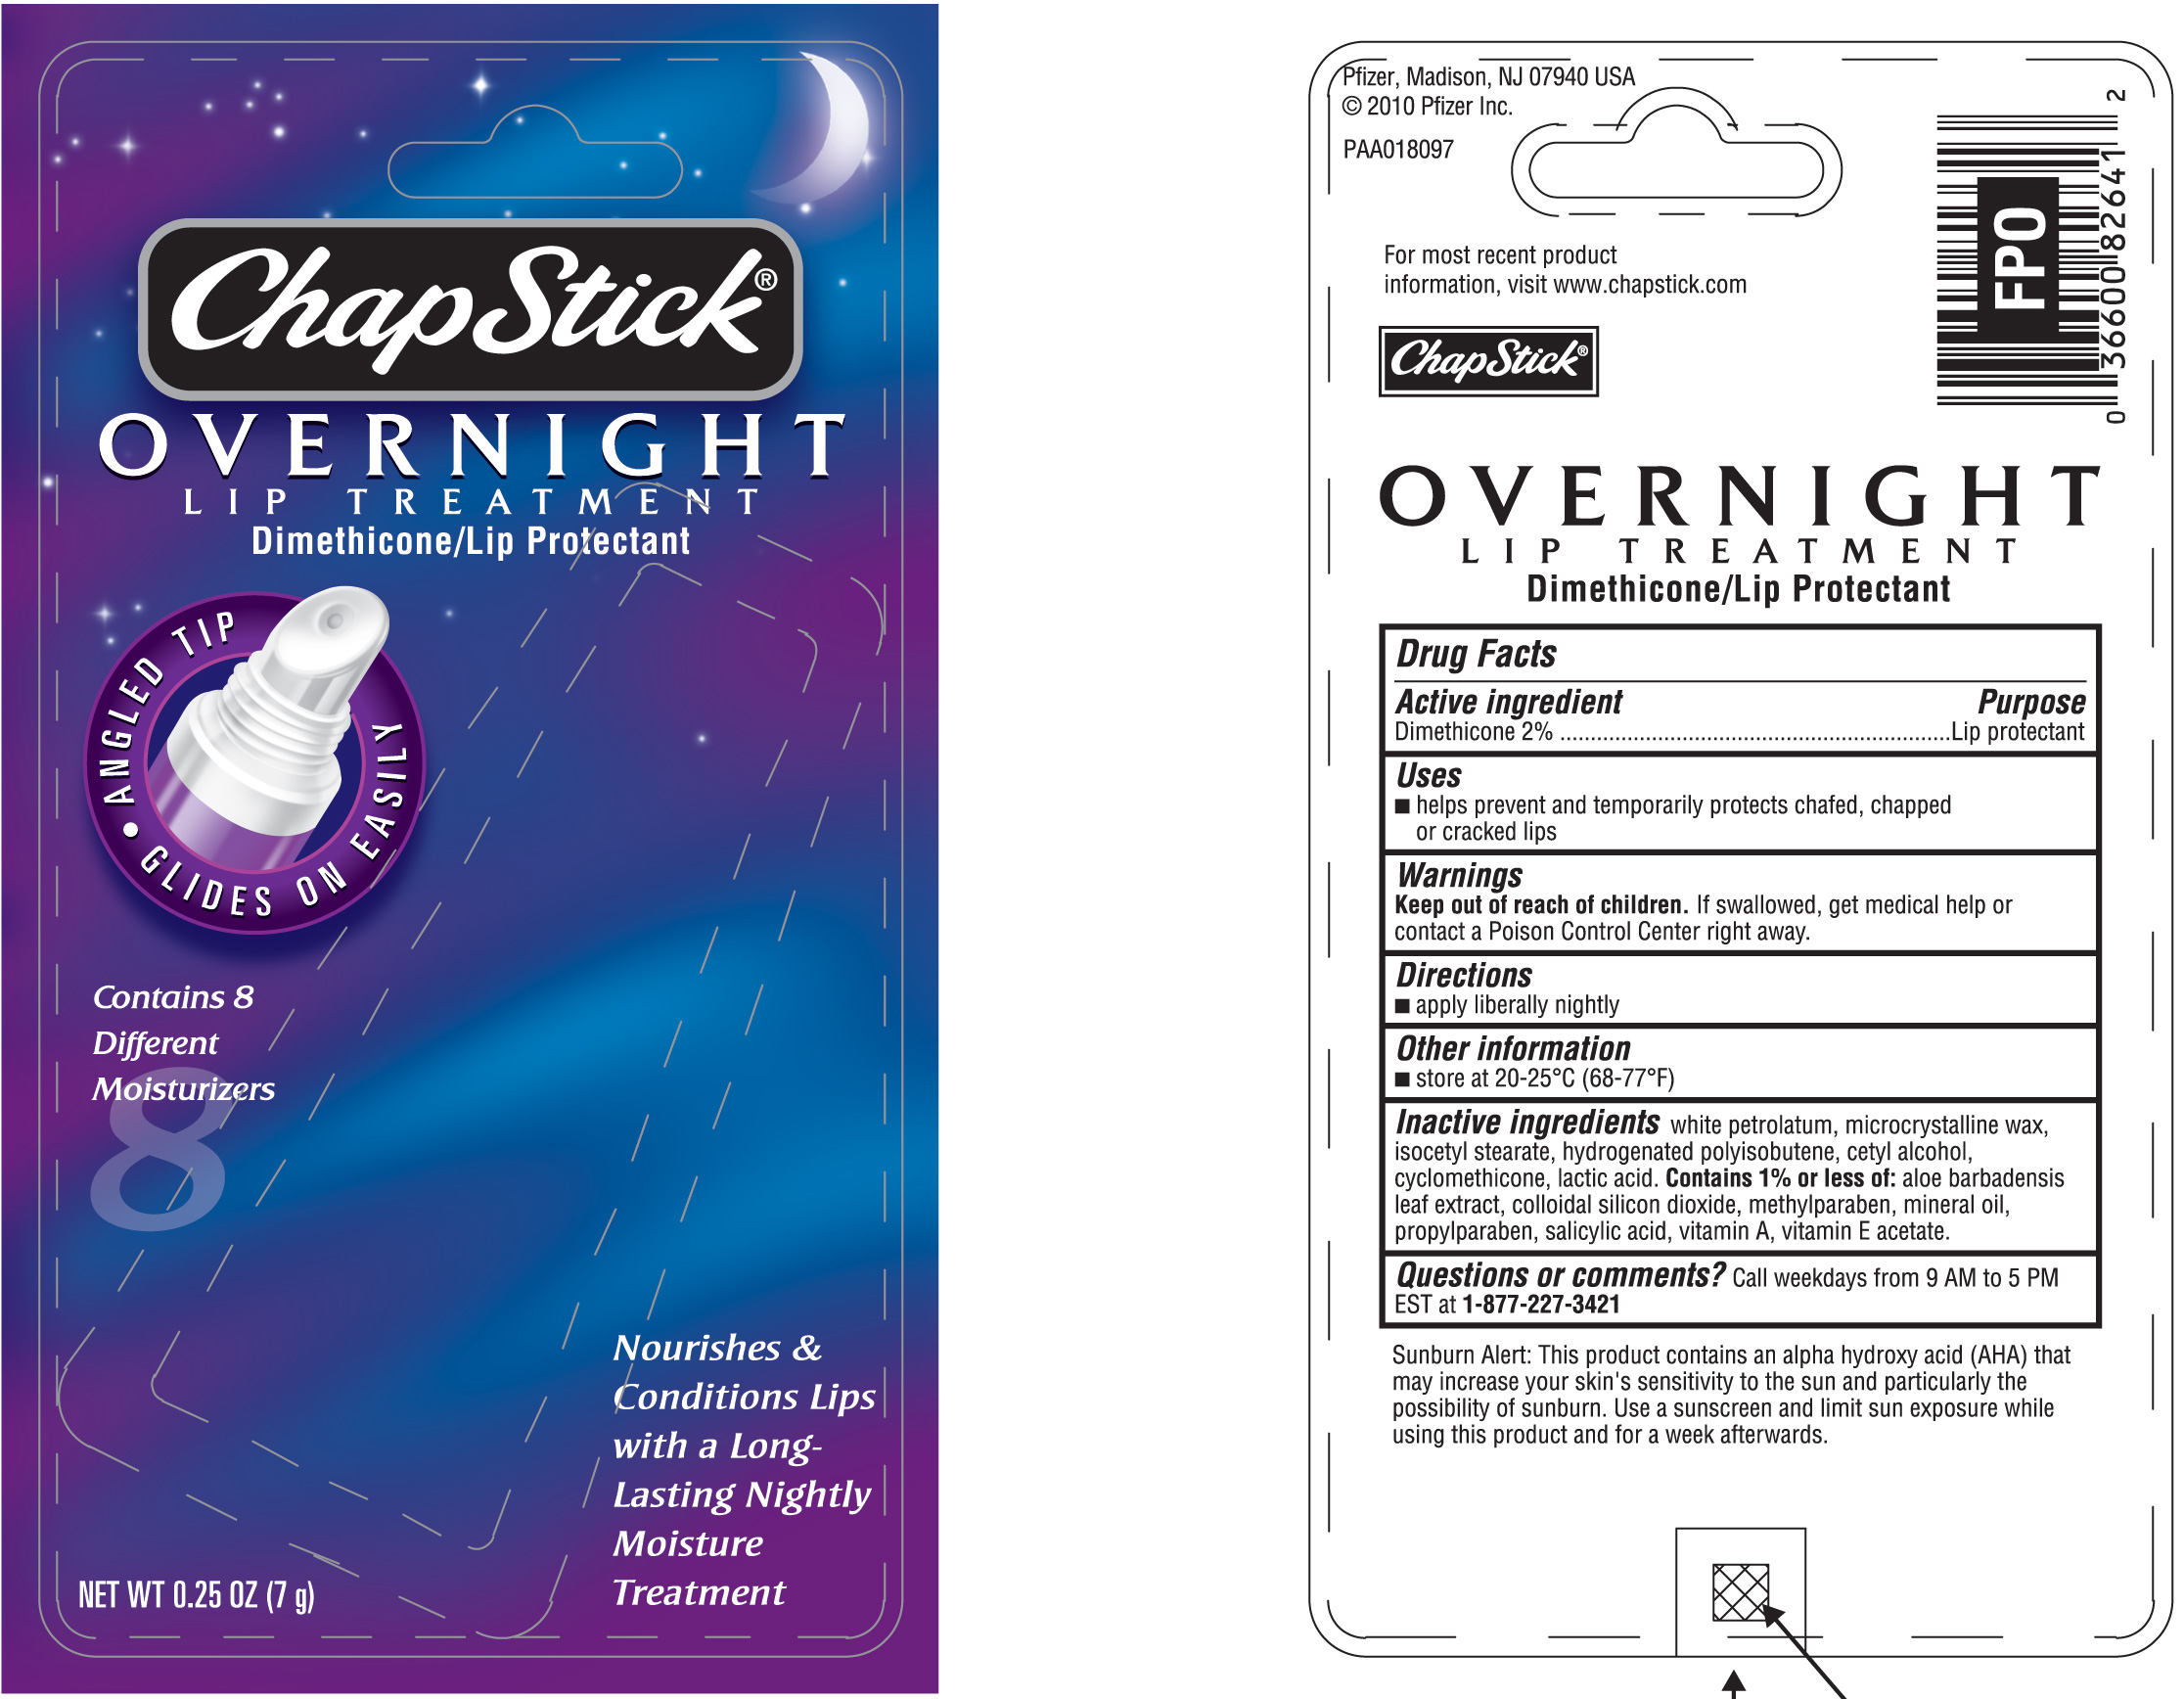 ChapStick Overnight Lip Treatment Packaging